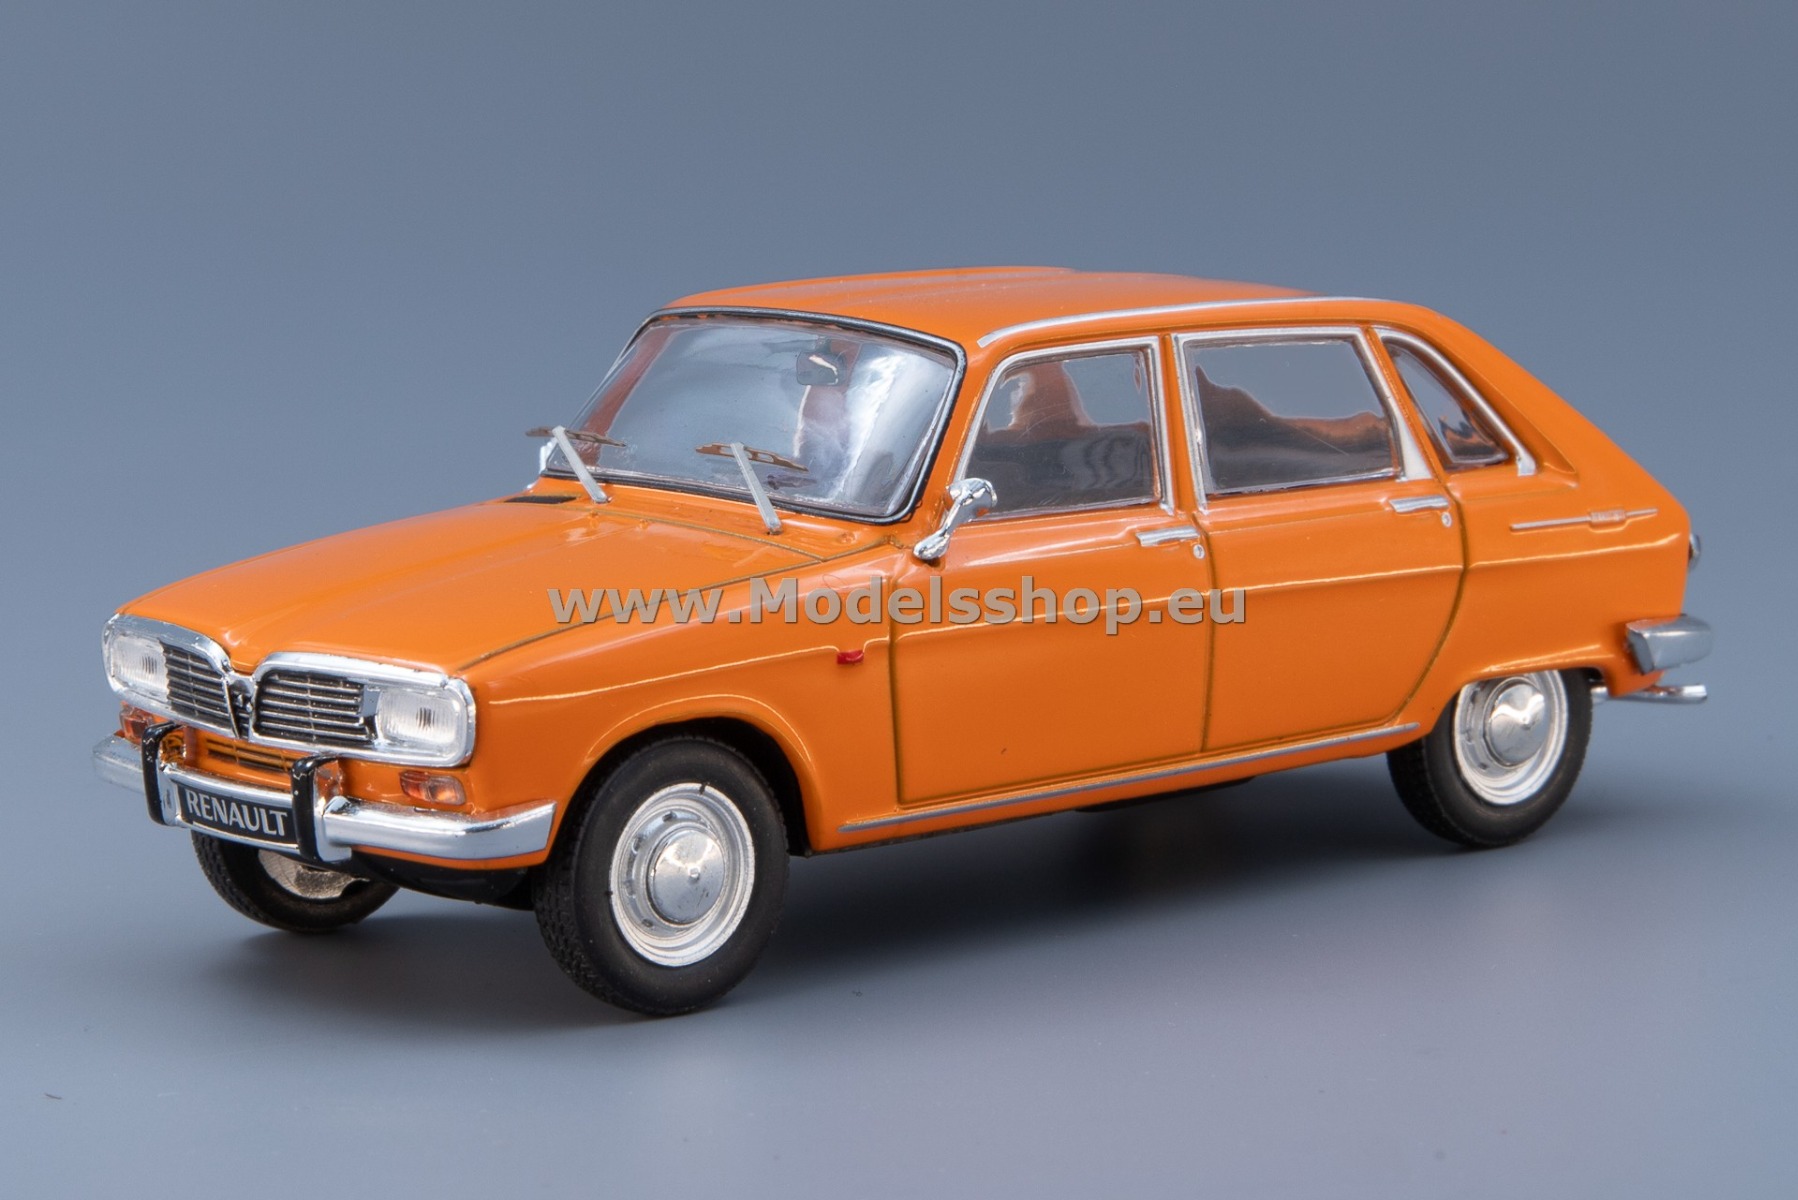 IXO CLC493N.22 Renault 16, 1969 /orange/